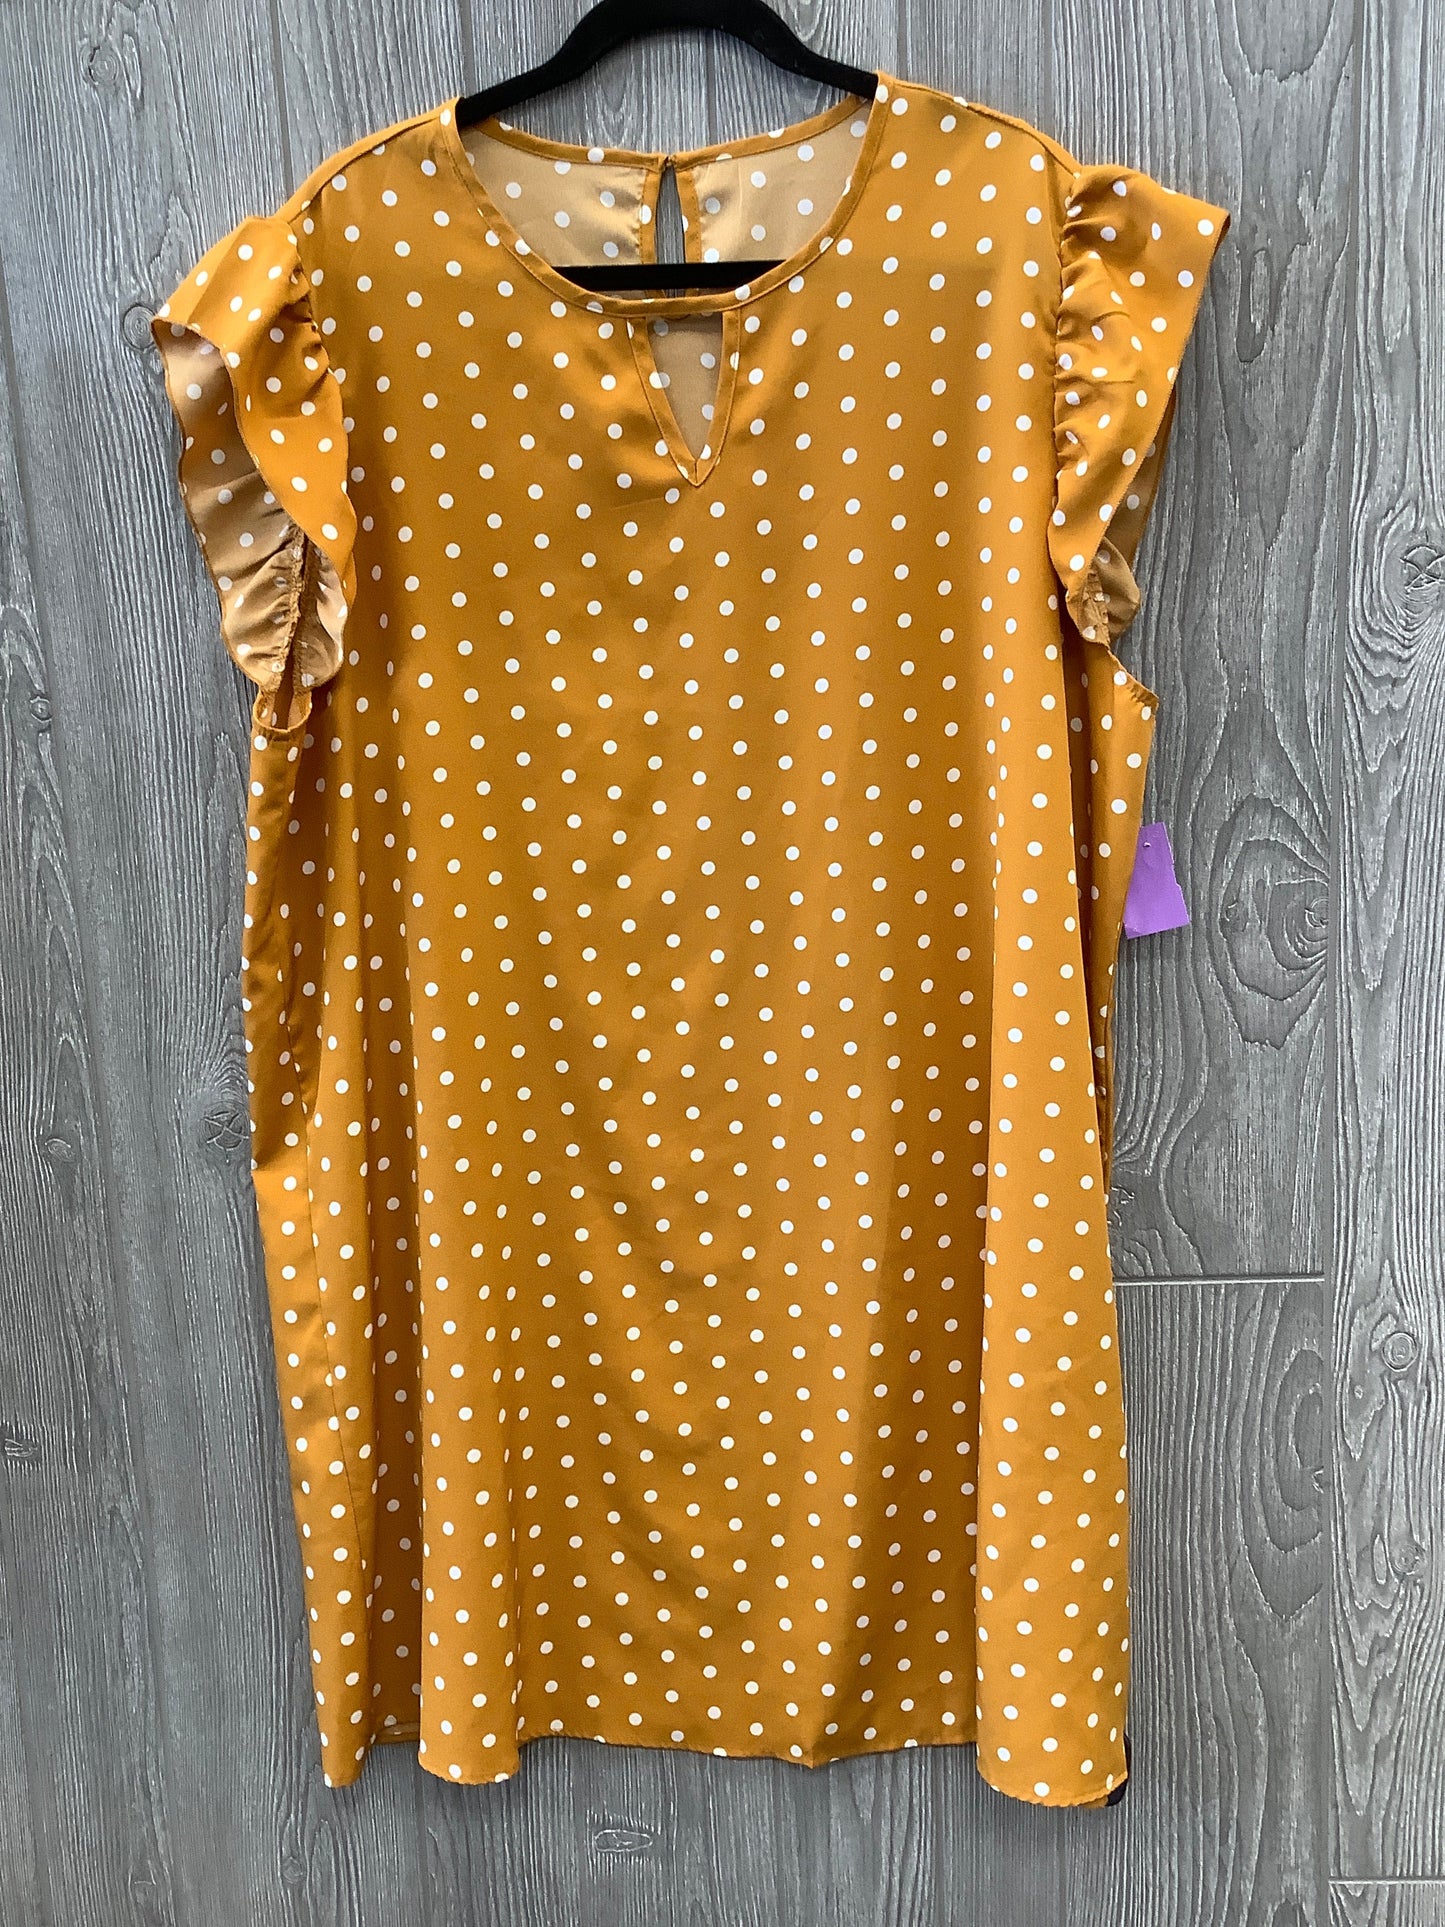 Polkadot Pattern Dress Casual Midi Shein, Size 3x